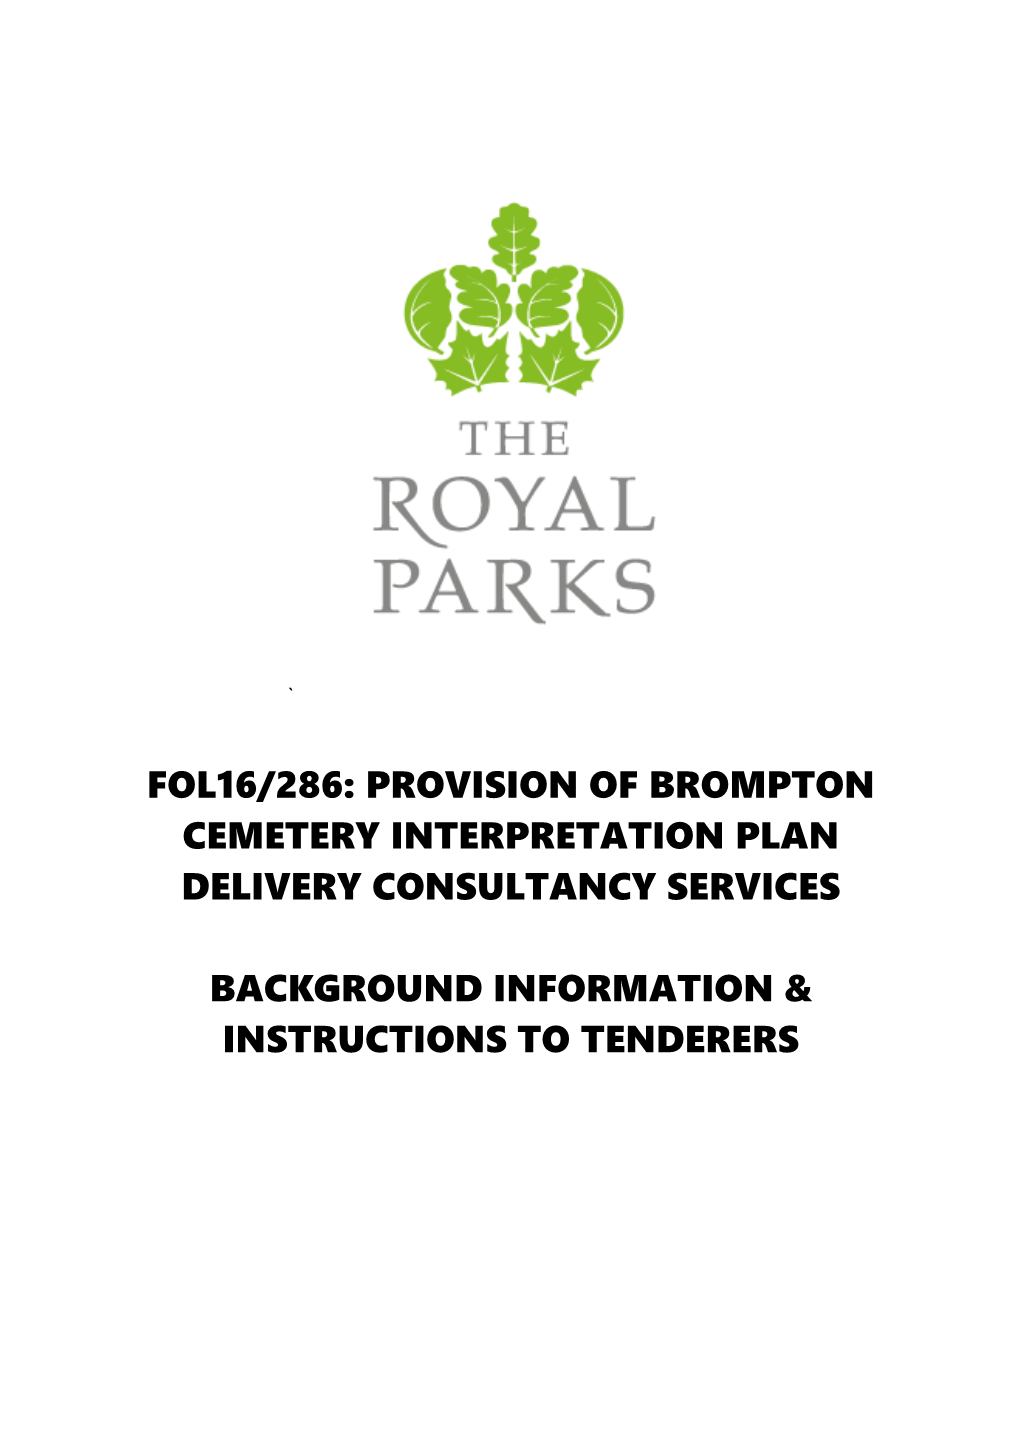 Fol16/286: Provision of Brompton Cemetery Interpretation Plan Delivery Consultancy Services